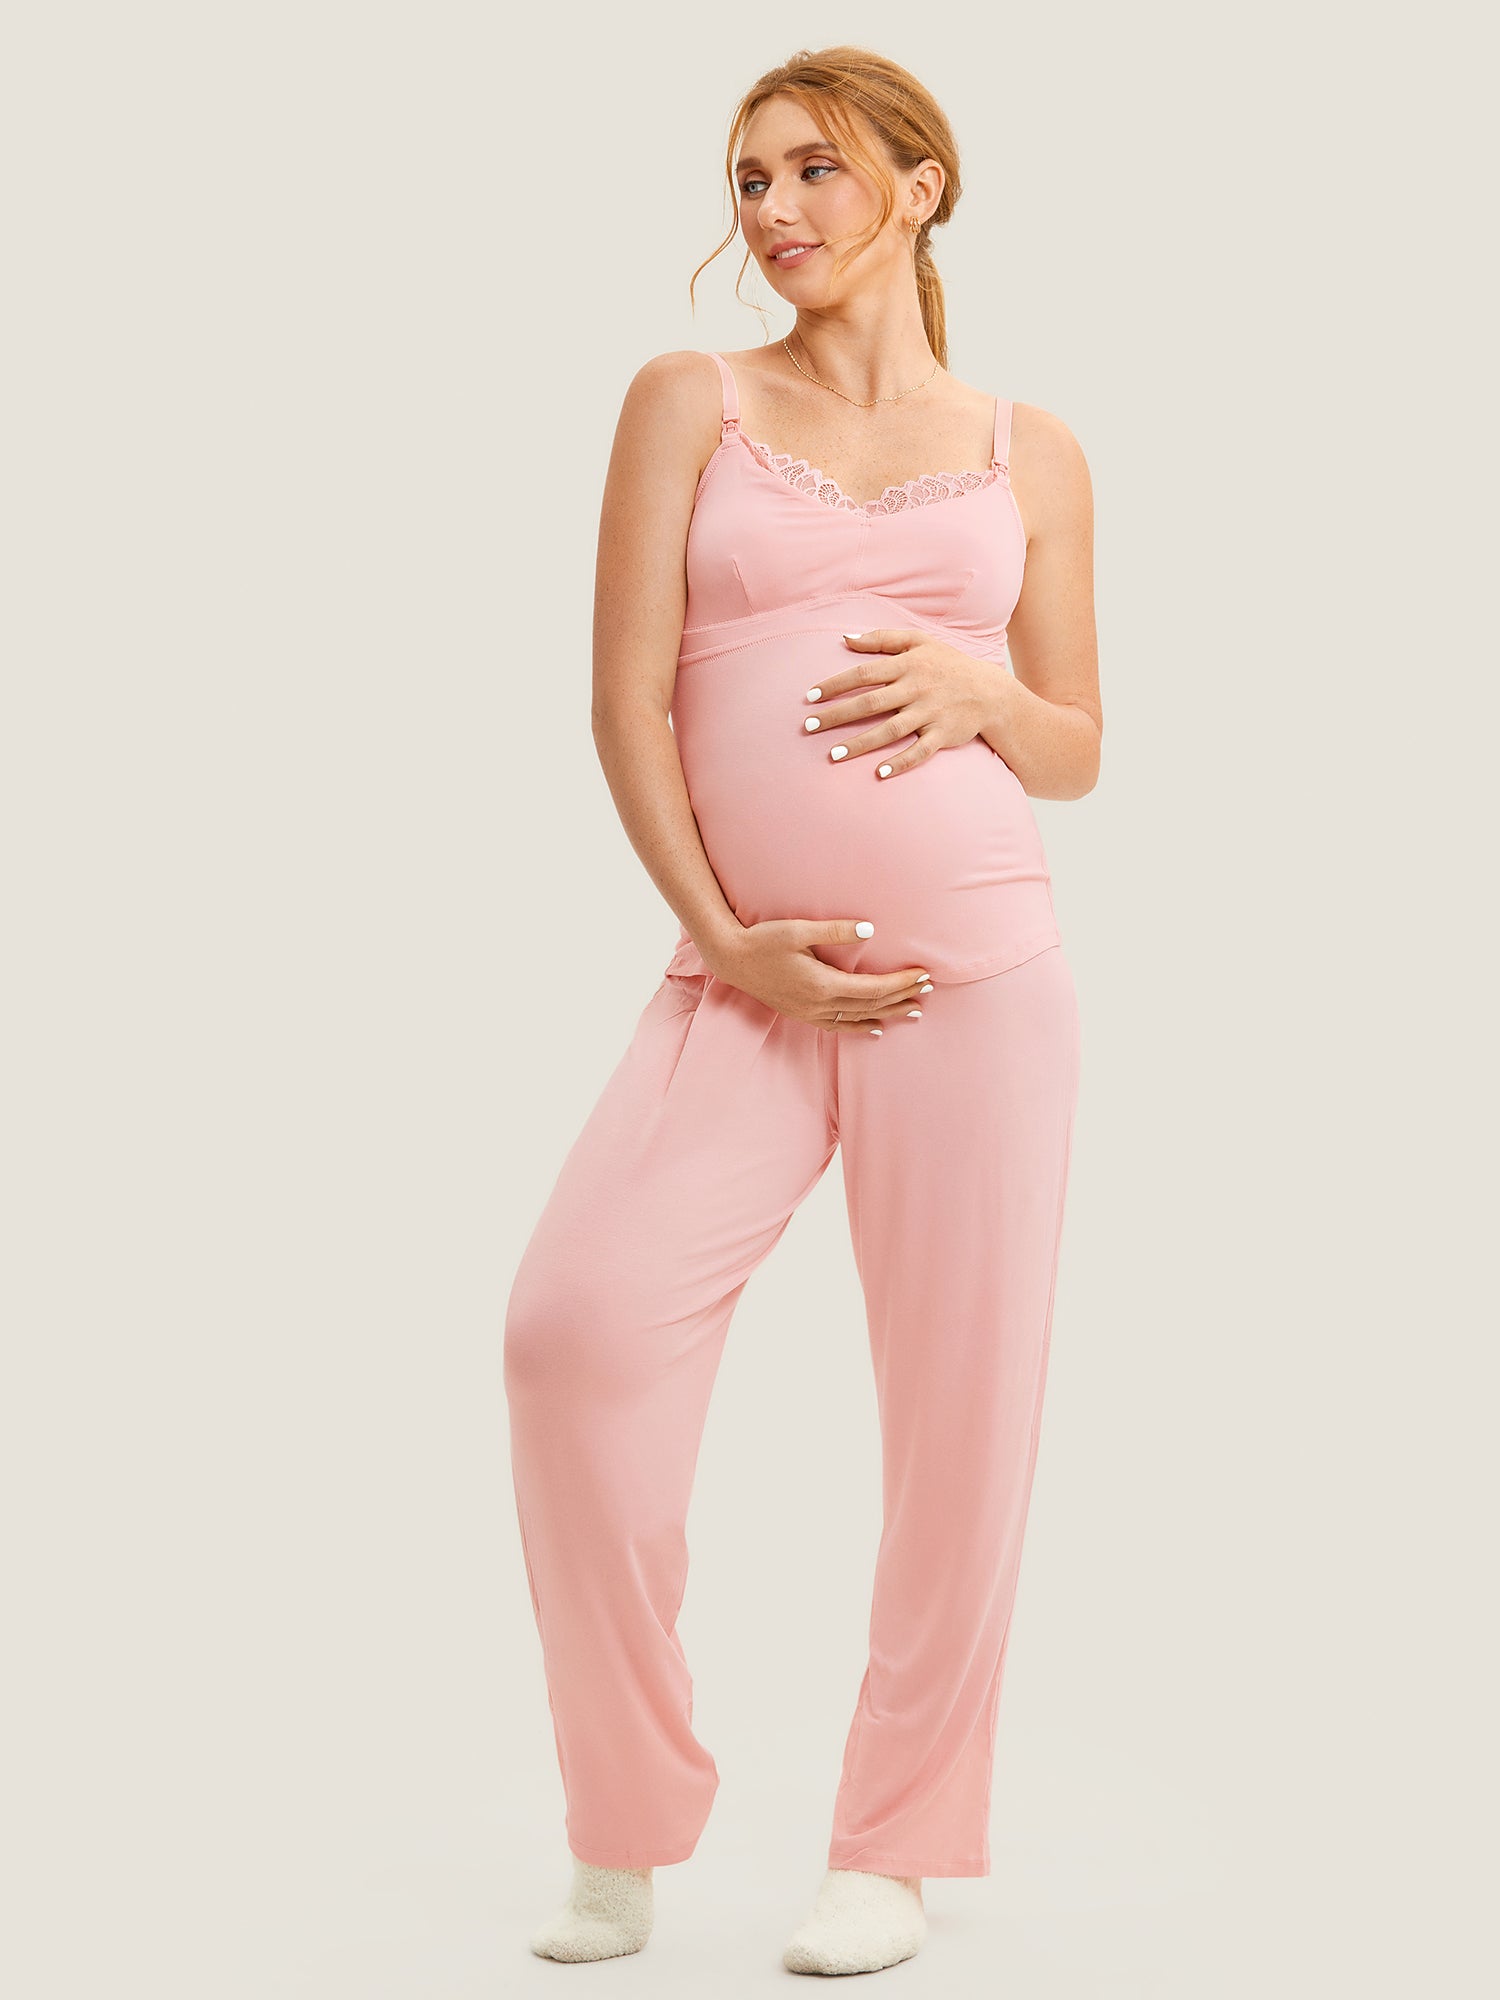 Lace Pregnancy Nursing Sleepwear Pink